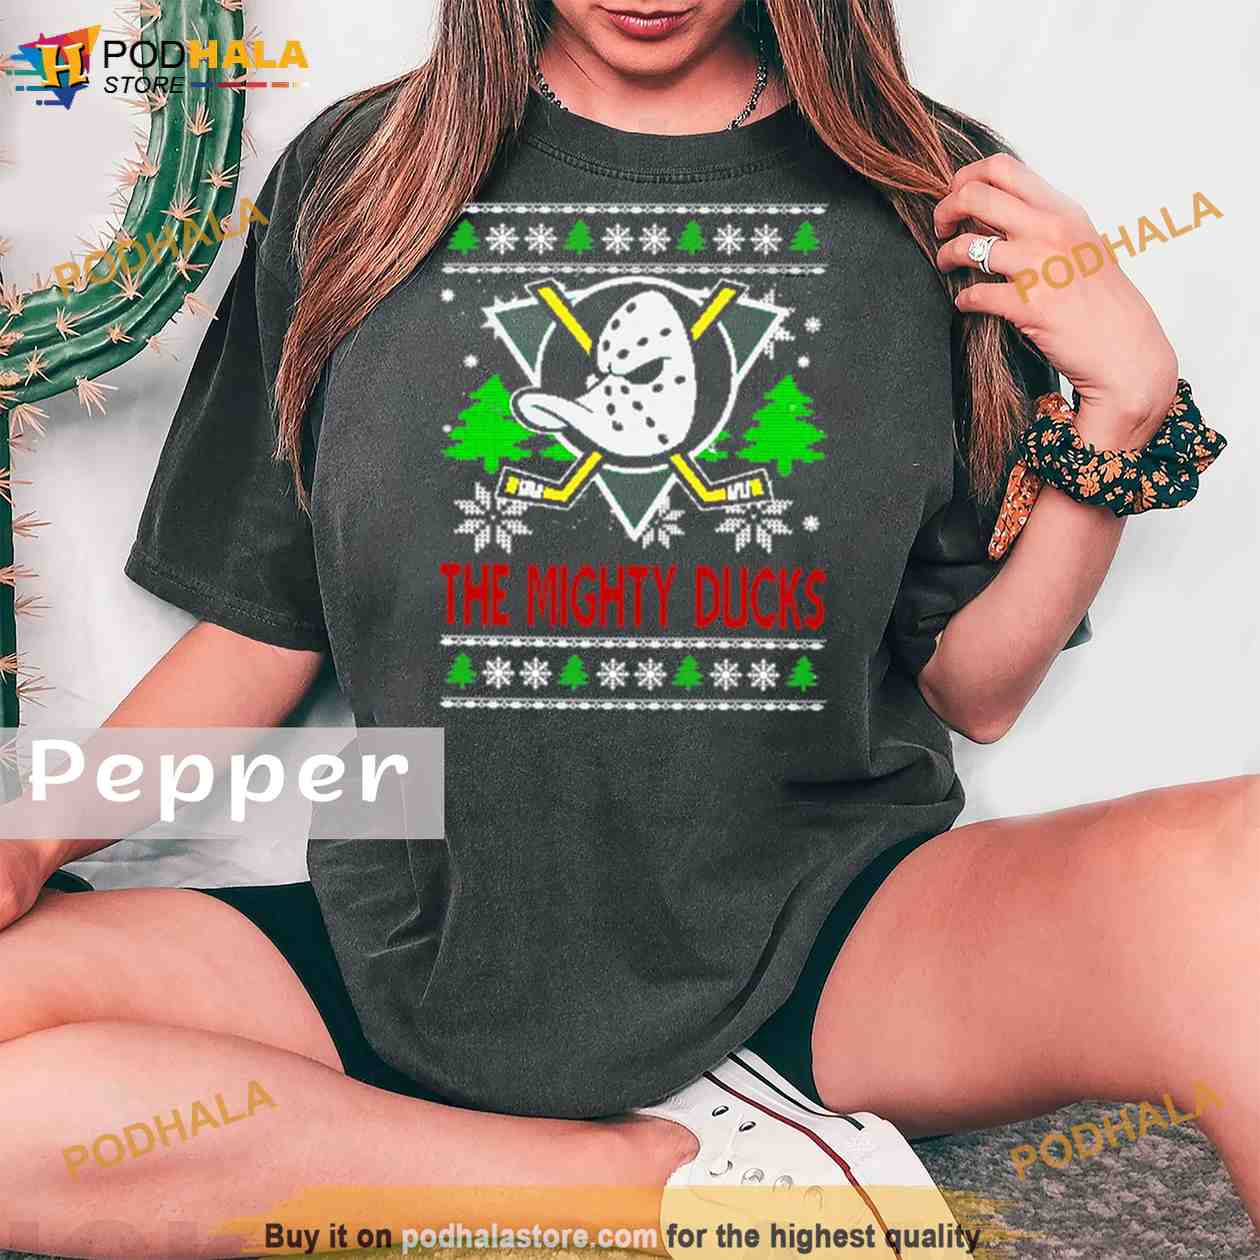 Cincinnati Mighty Ducks Ugly Christmas Sweatshirt - Crewneck Sweatshirt /  Black / S